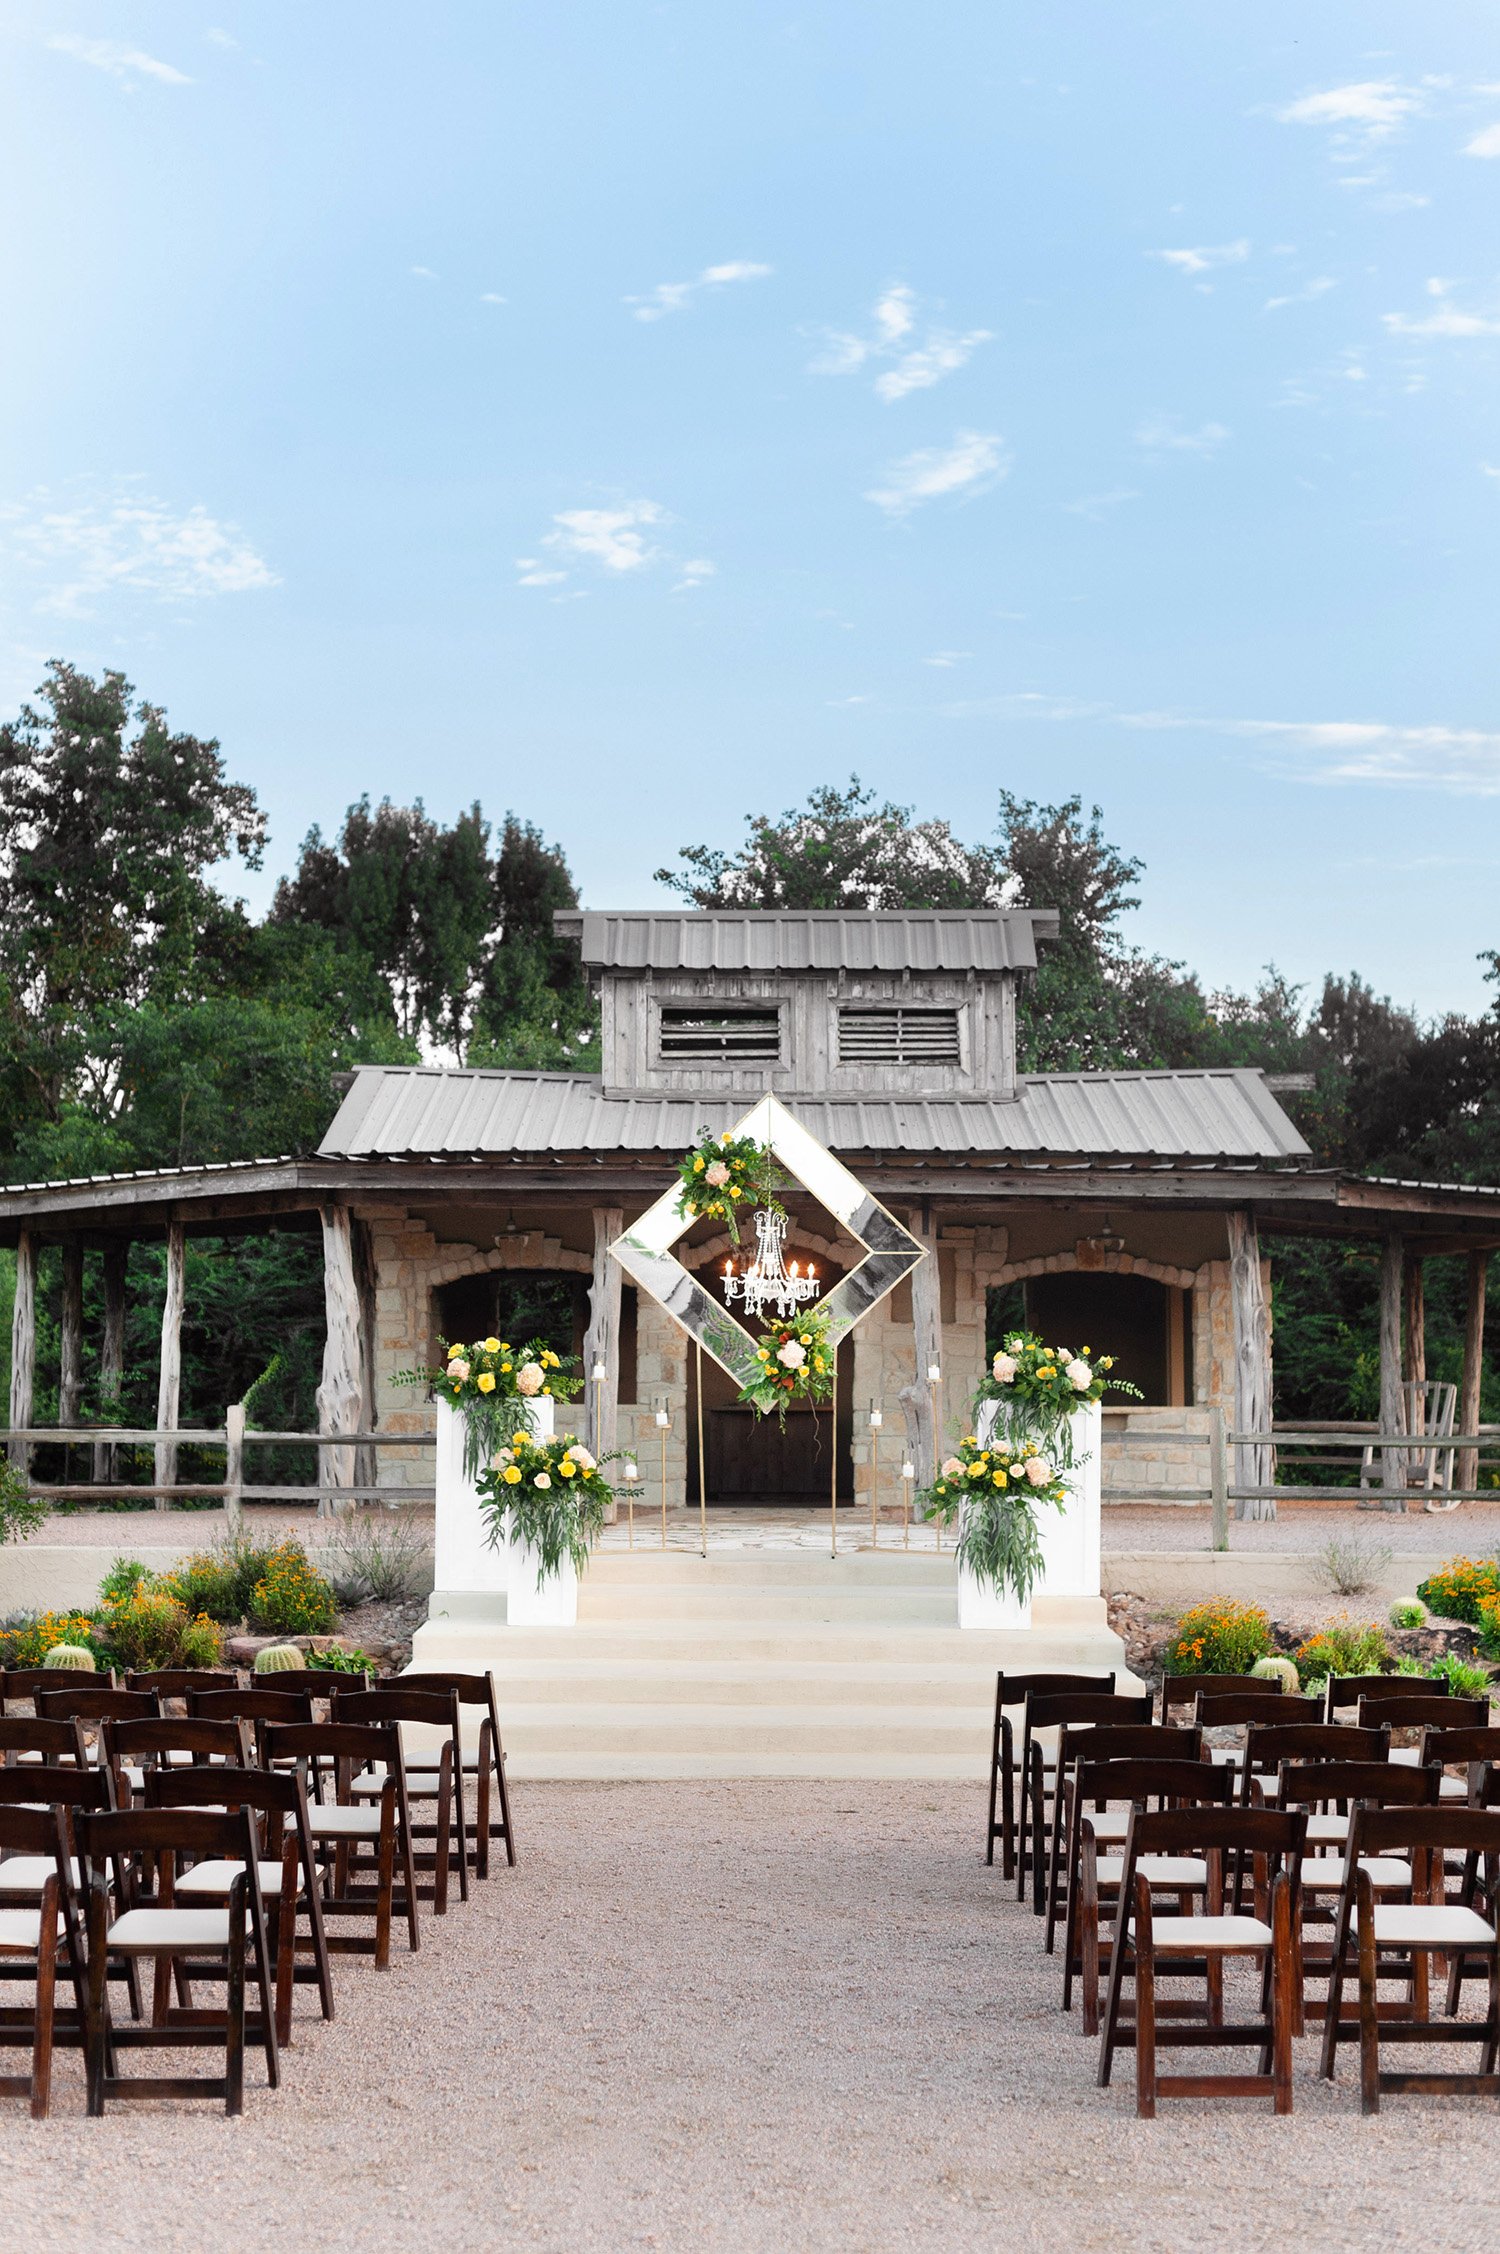 The Texas Bride - Weddings In Houston - Moffitt Oaks Styled Shoot - Jessica Frey Photography